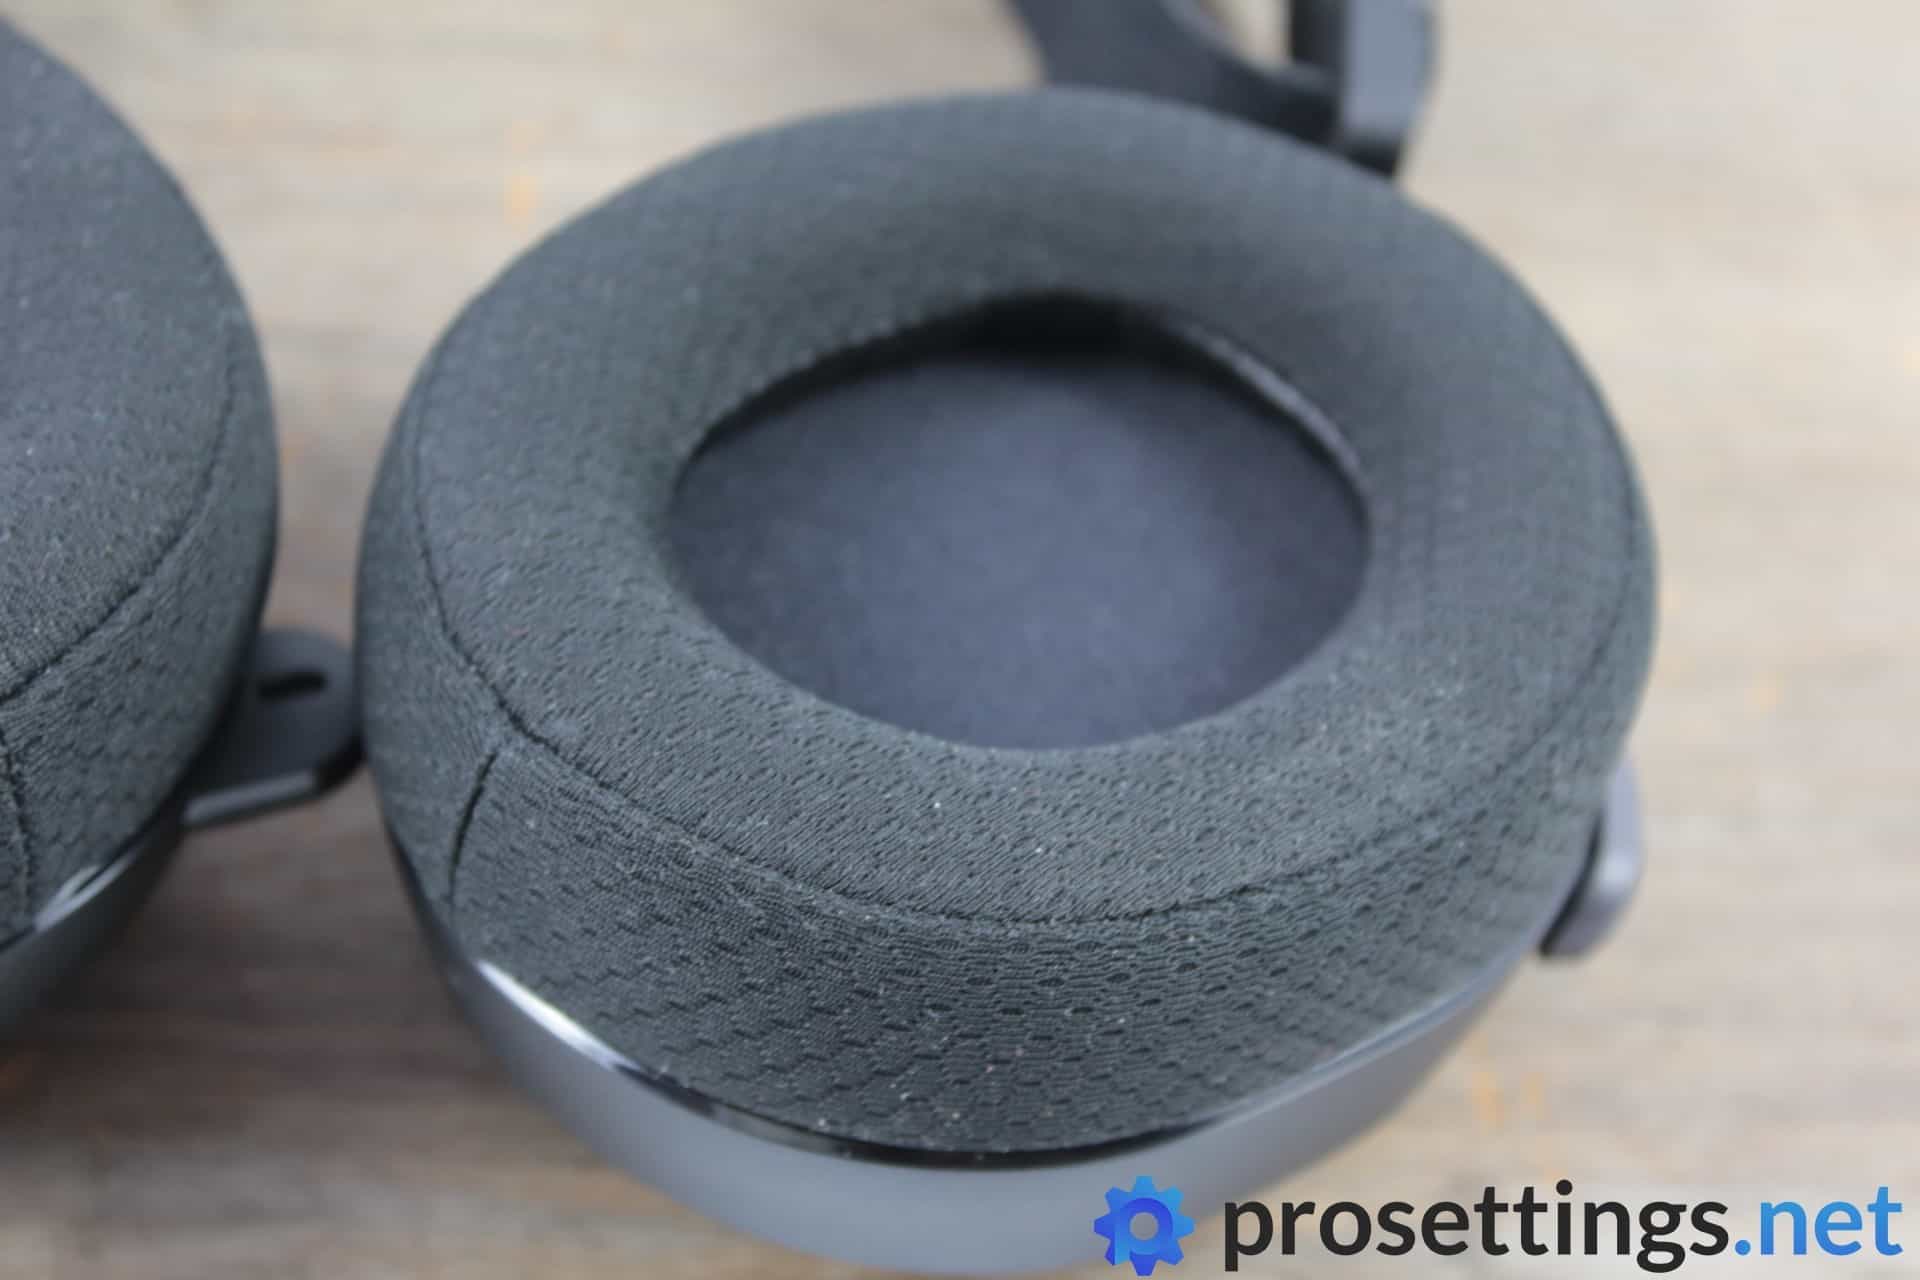 SteelSeries Arctis Pro Review Headset